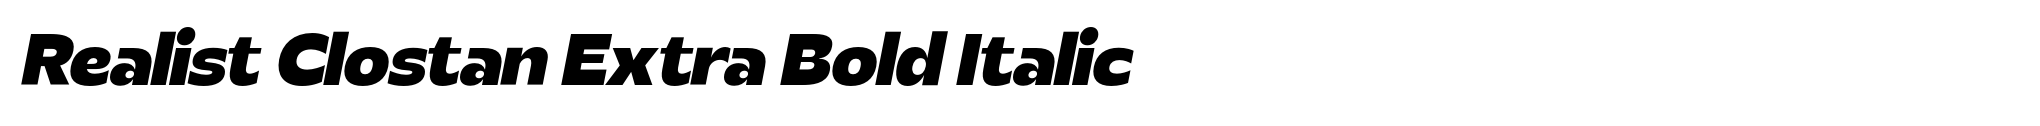 Realist Clostan Extra Bold Italic image